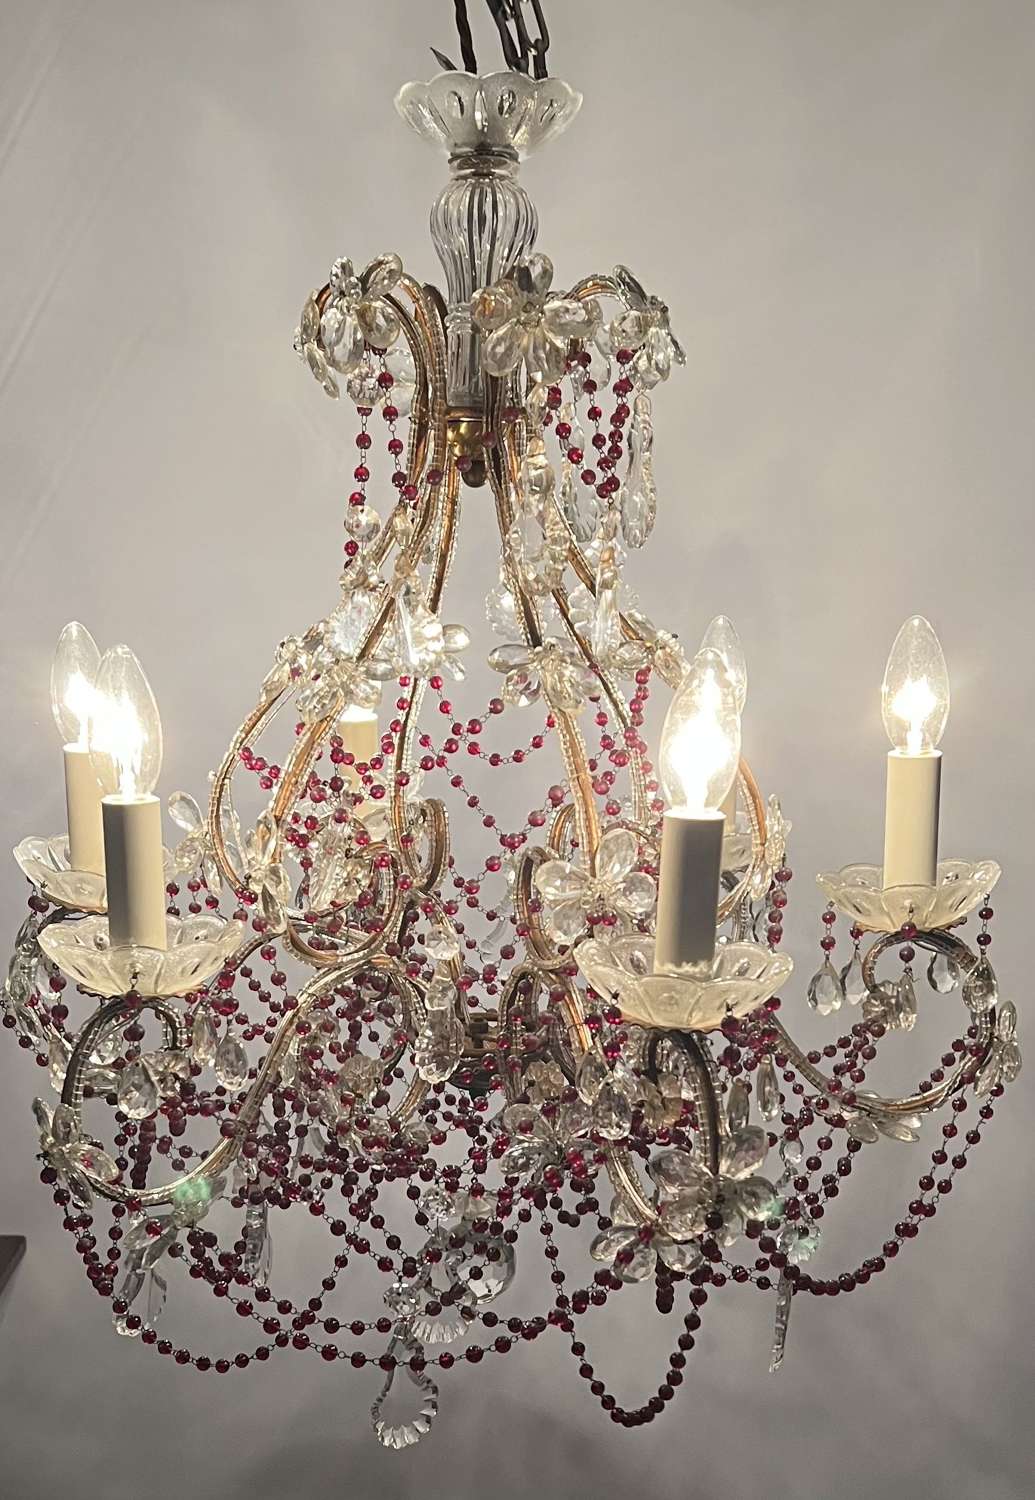 An exquisite Italian six light chandelier